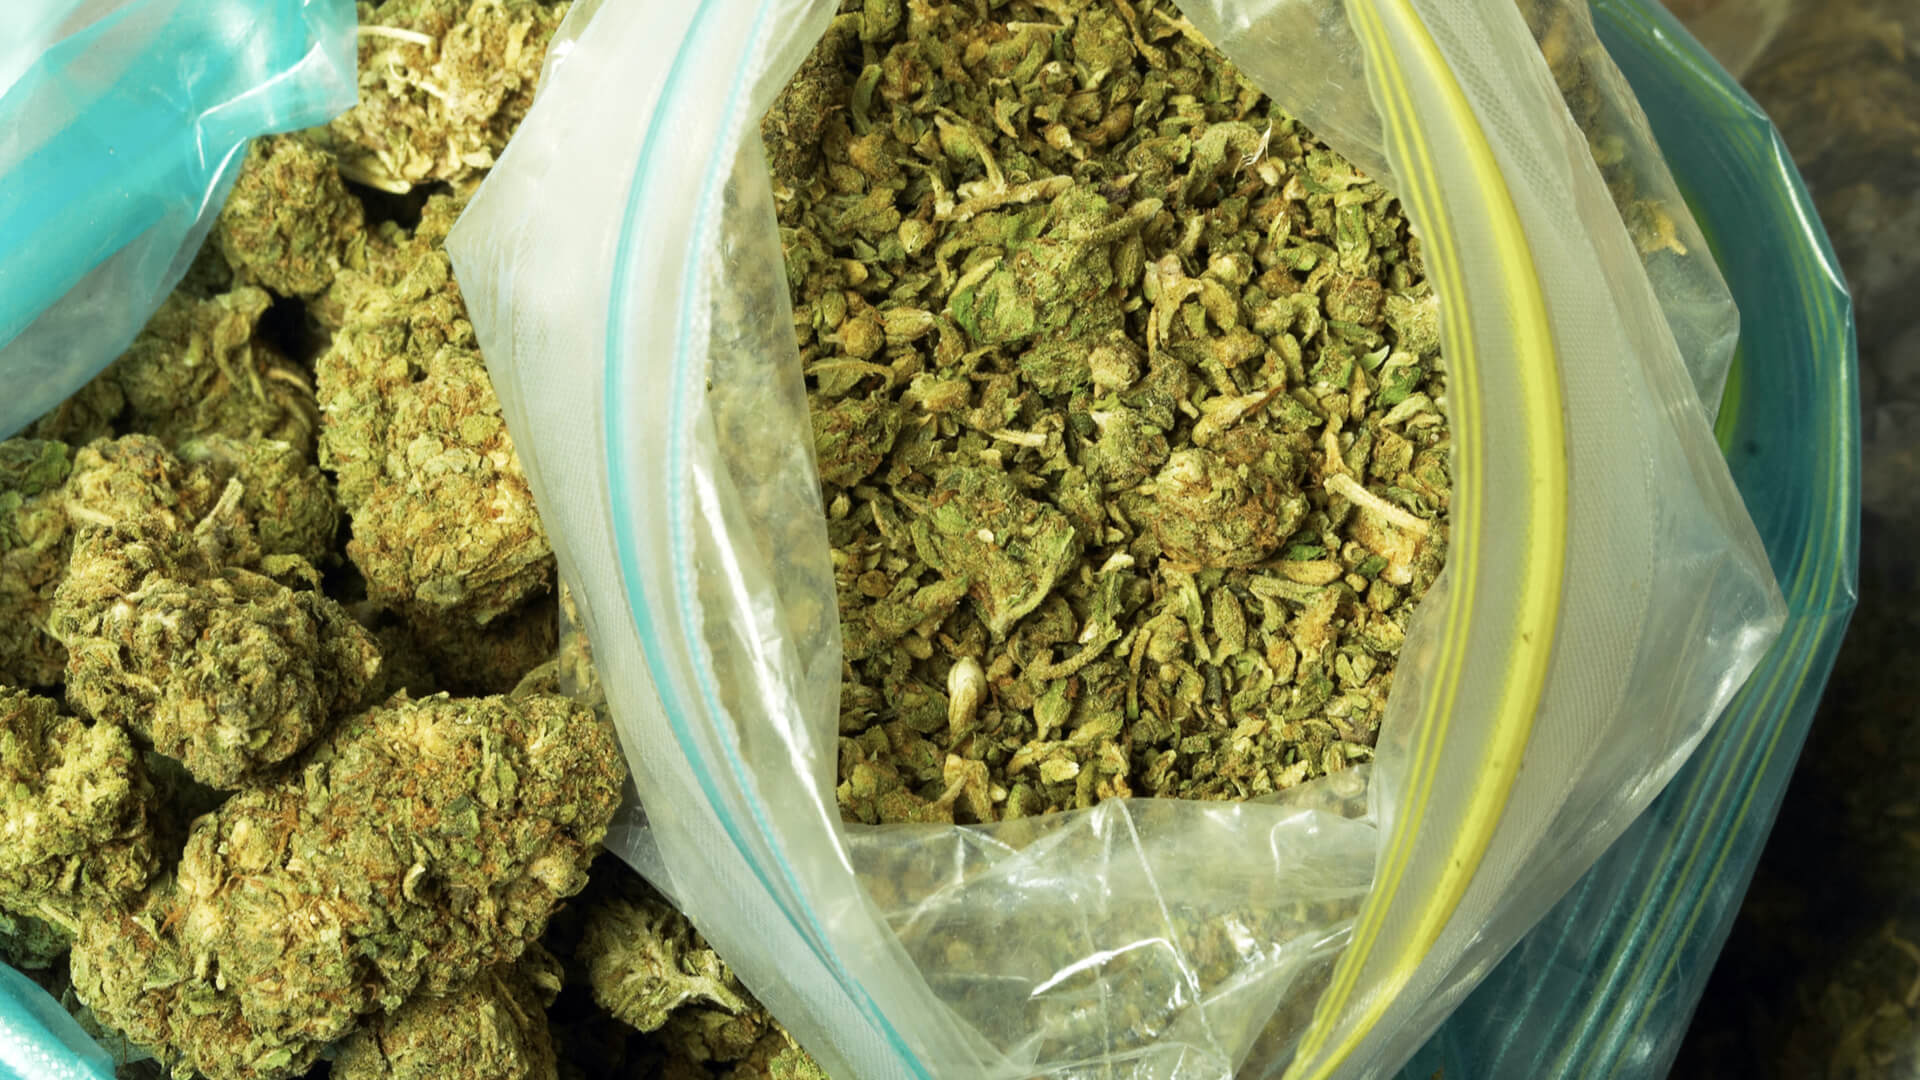 Large amounts of marijuana in Ziploc bags